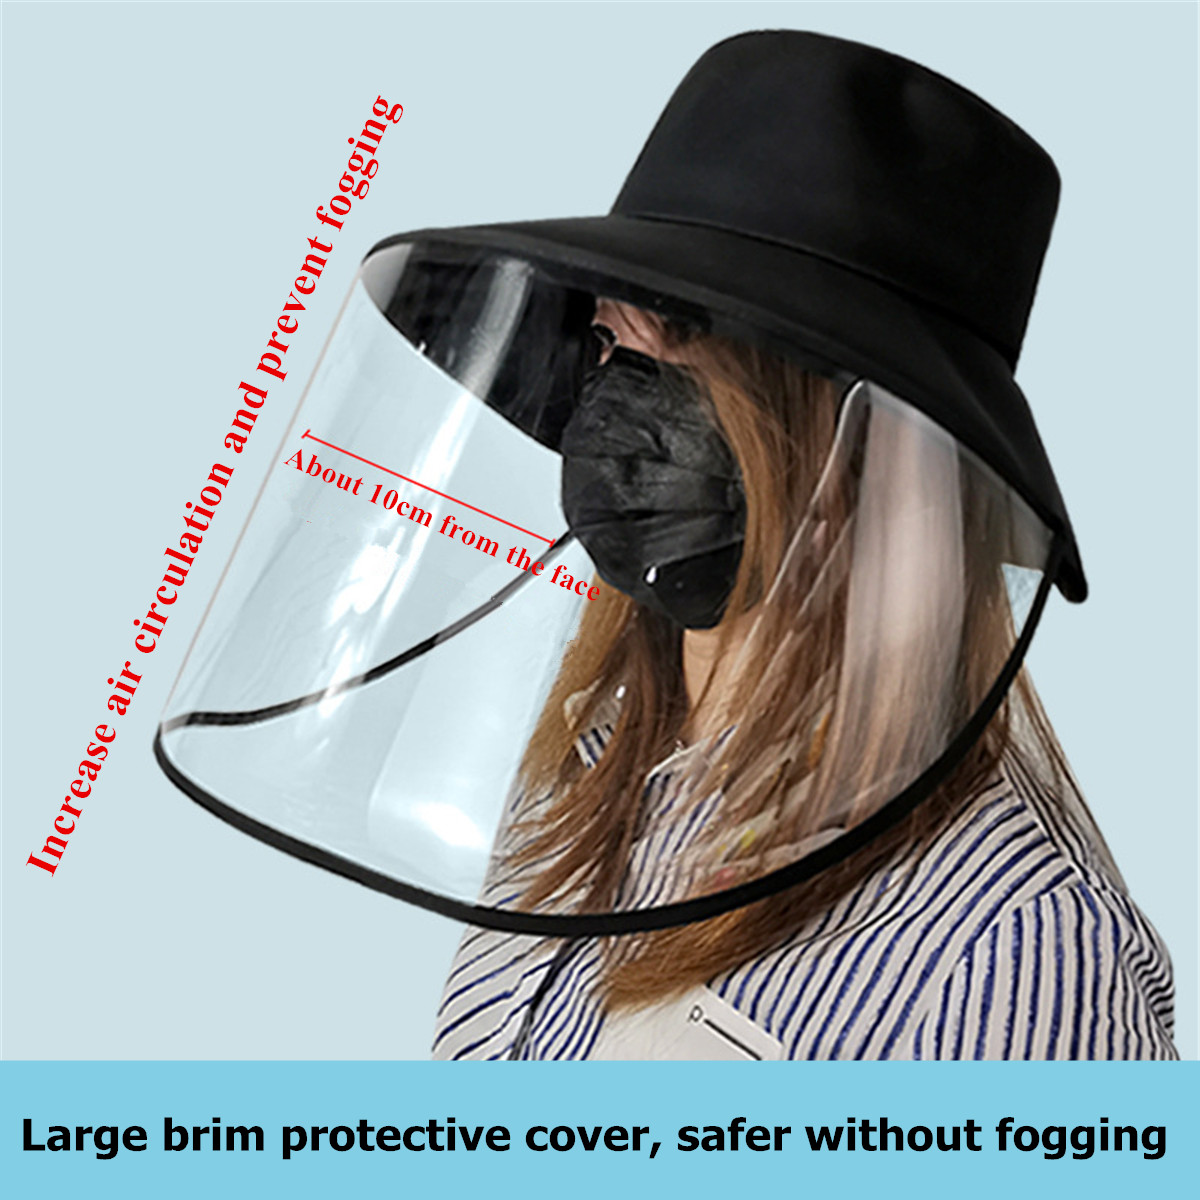 58cm-Removable-Protective-Cap-Anti-fog-Hat-Dustproof-Face-Protection-Fisherman-Cap-1650217-4